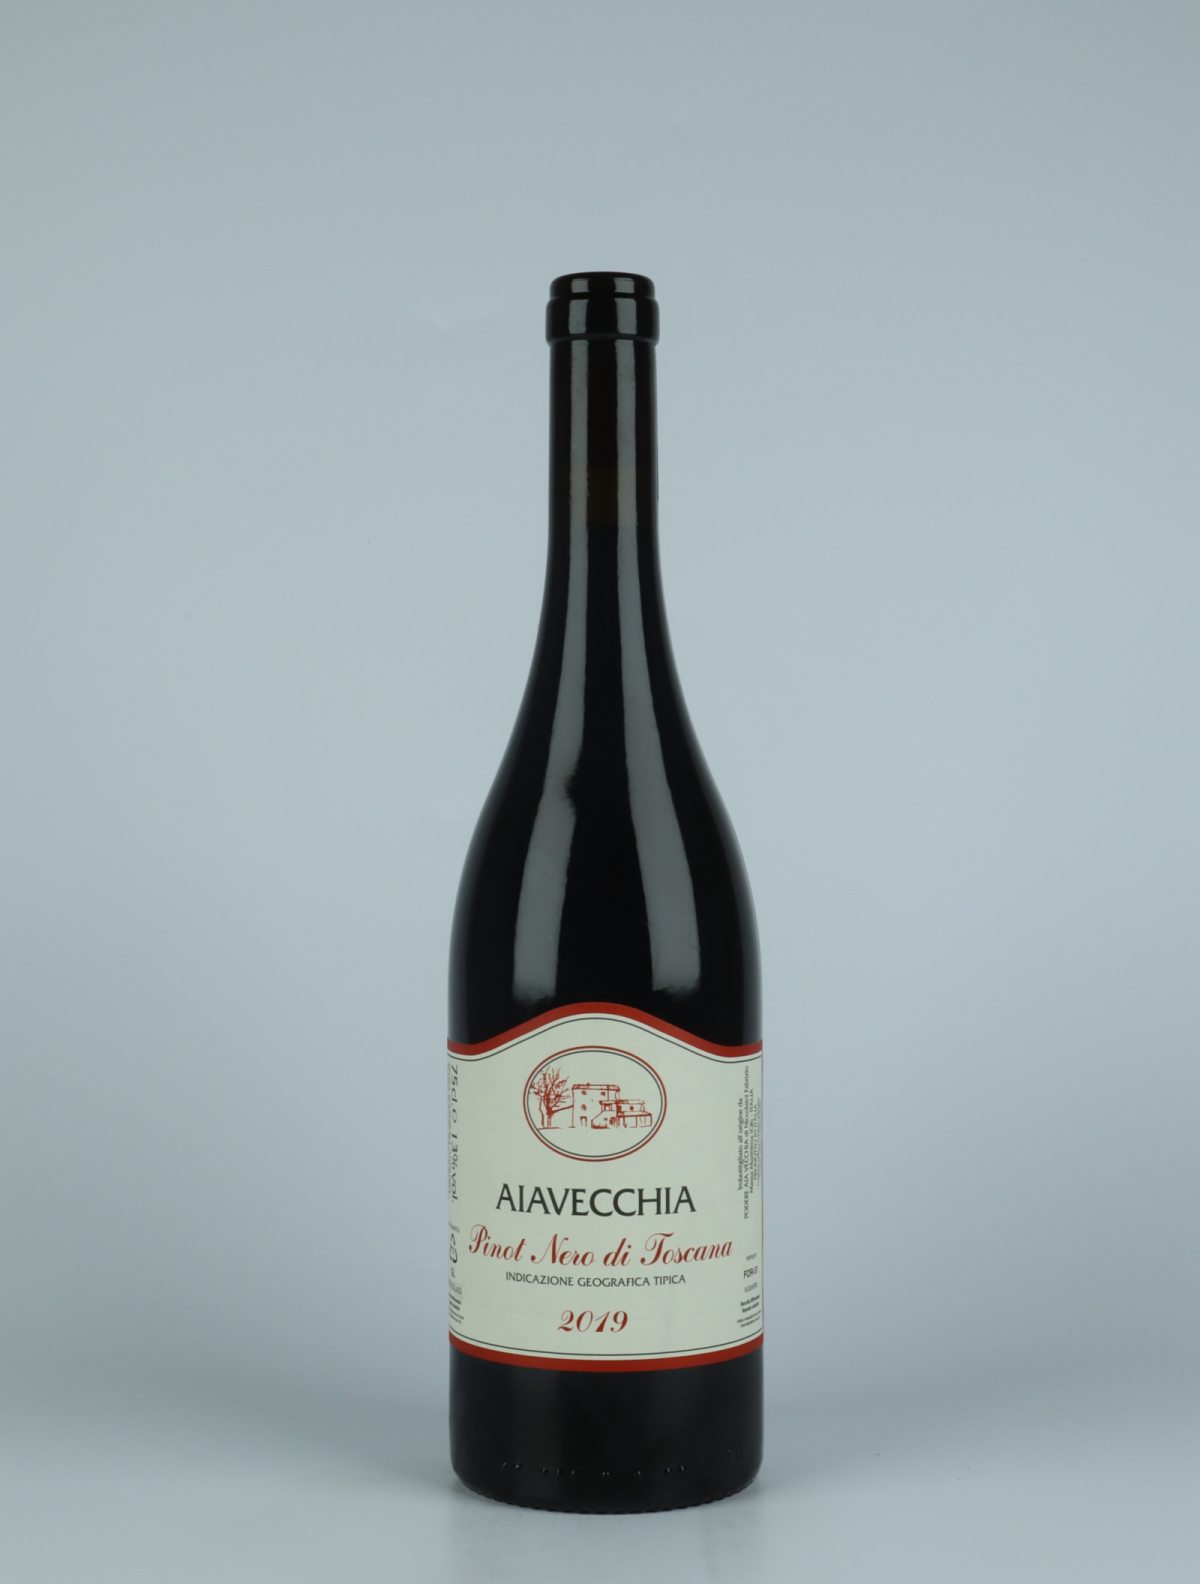 En flaske 2019 Pinot Nero Rødvin fra Aia Vecchia, Toscana i Italien